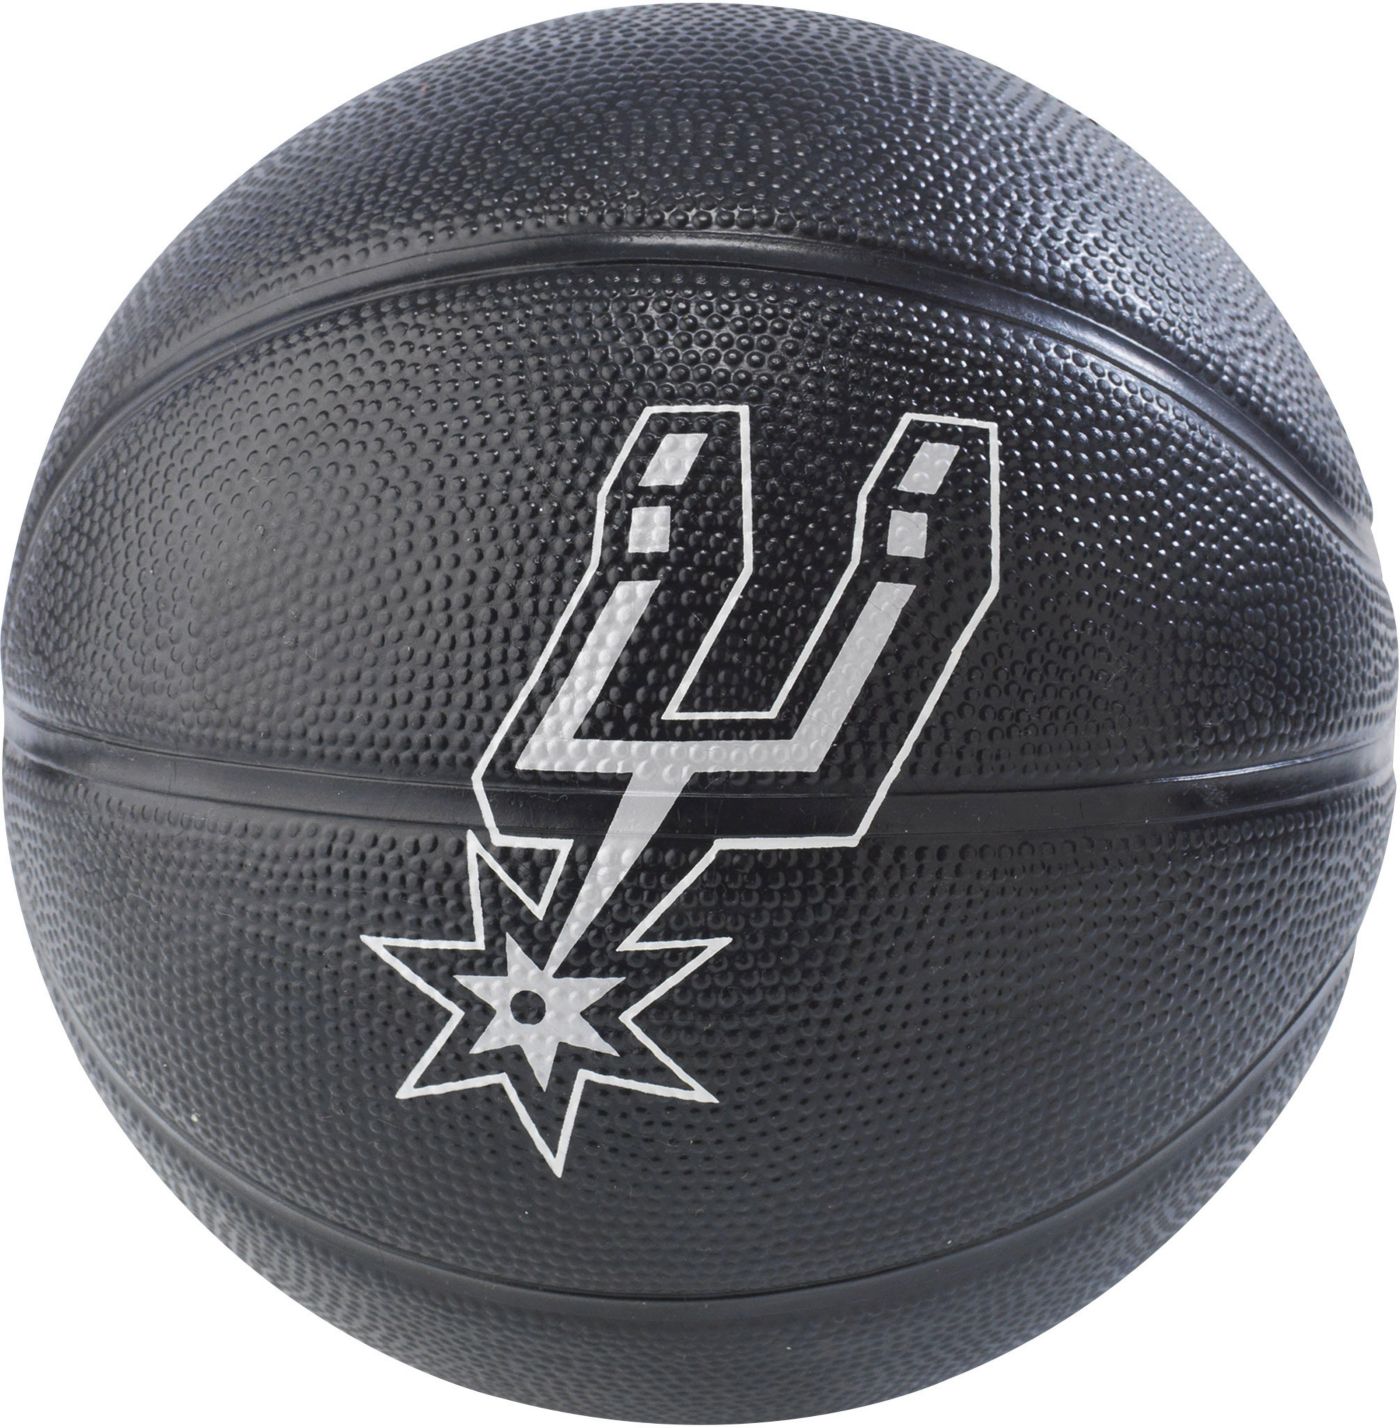 Spalding San Antonio Spurs Mini Basketball | DICK'S ...